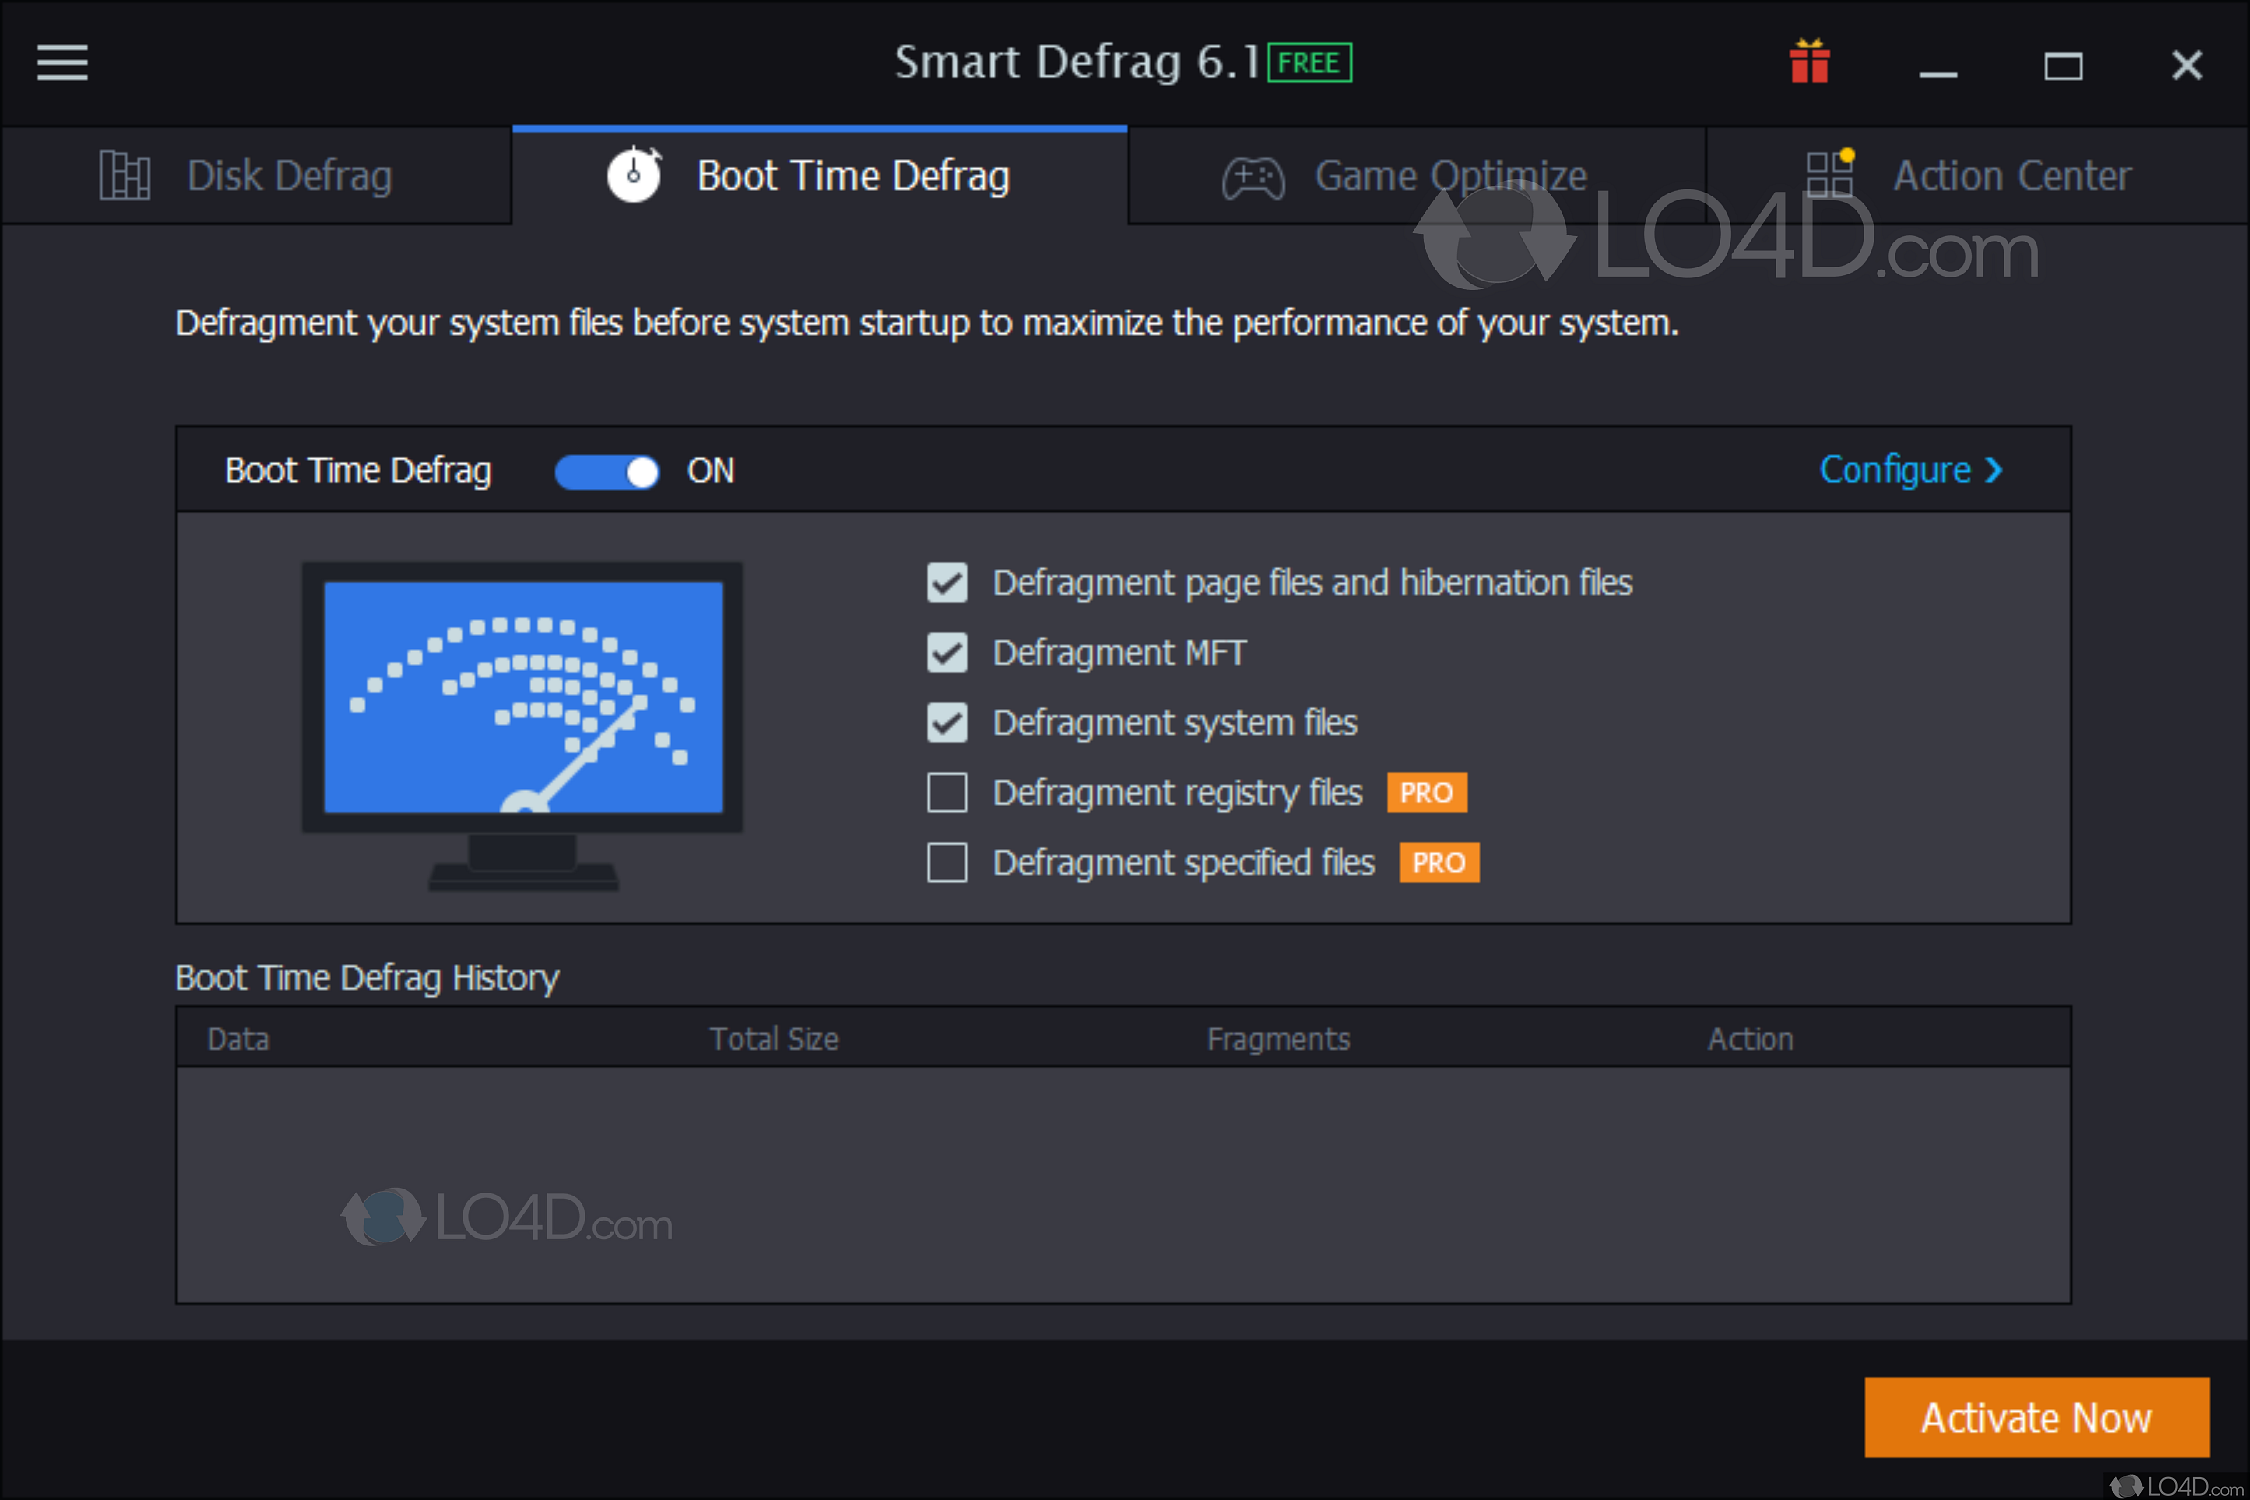 iobit smart defrag portable